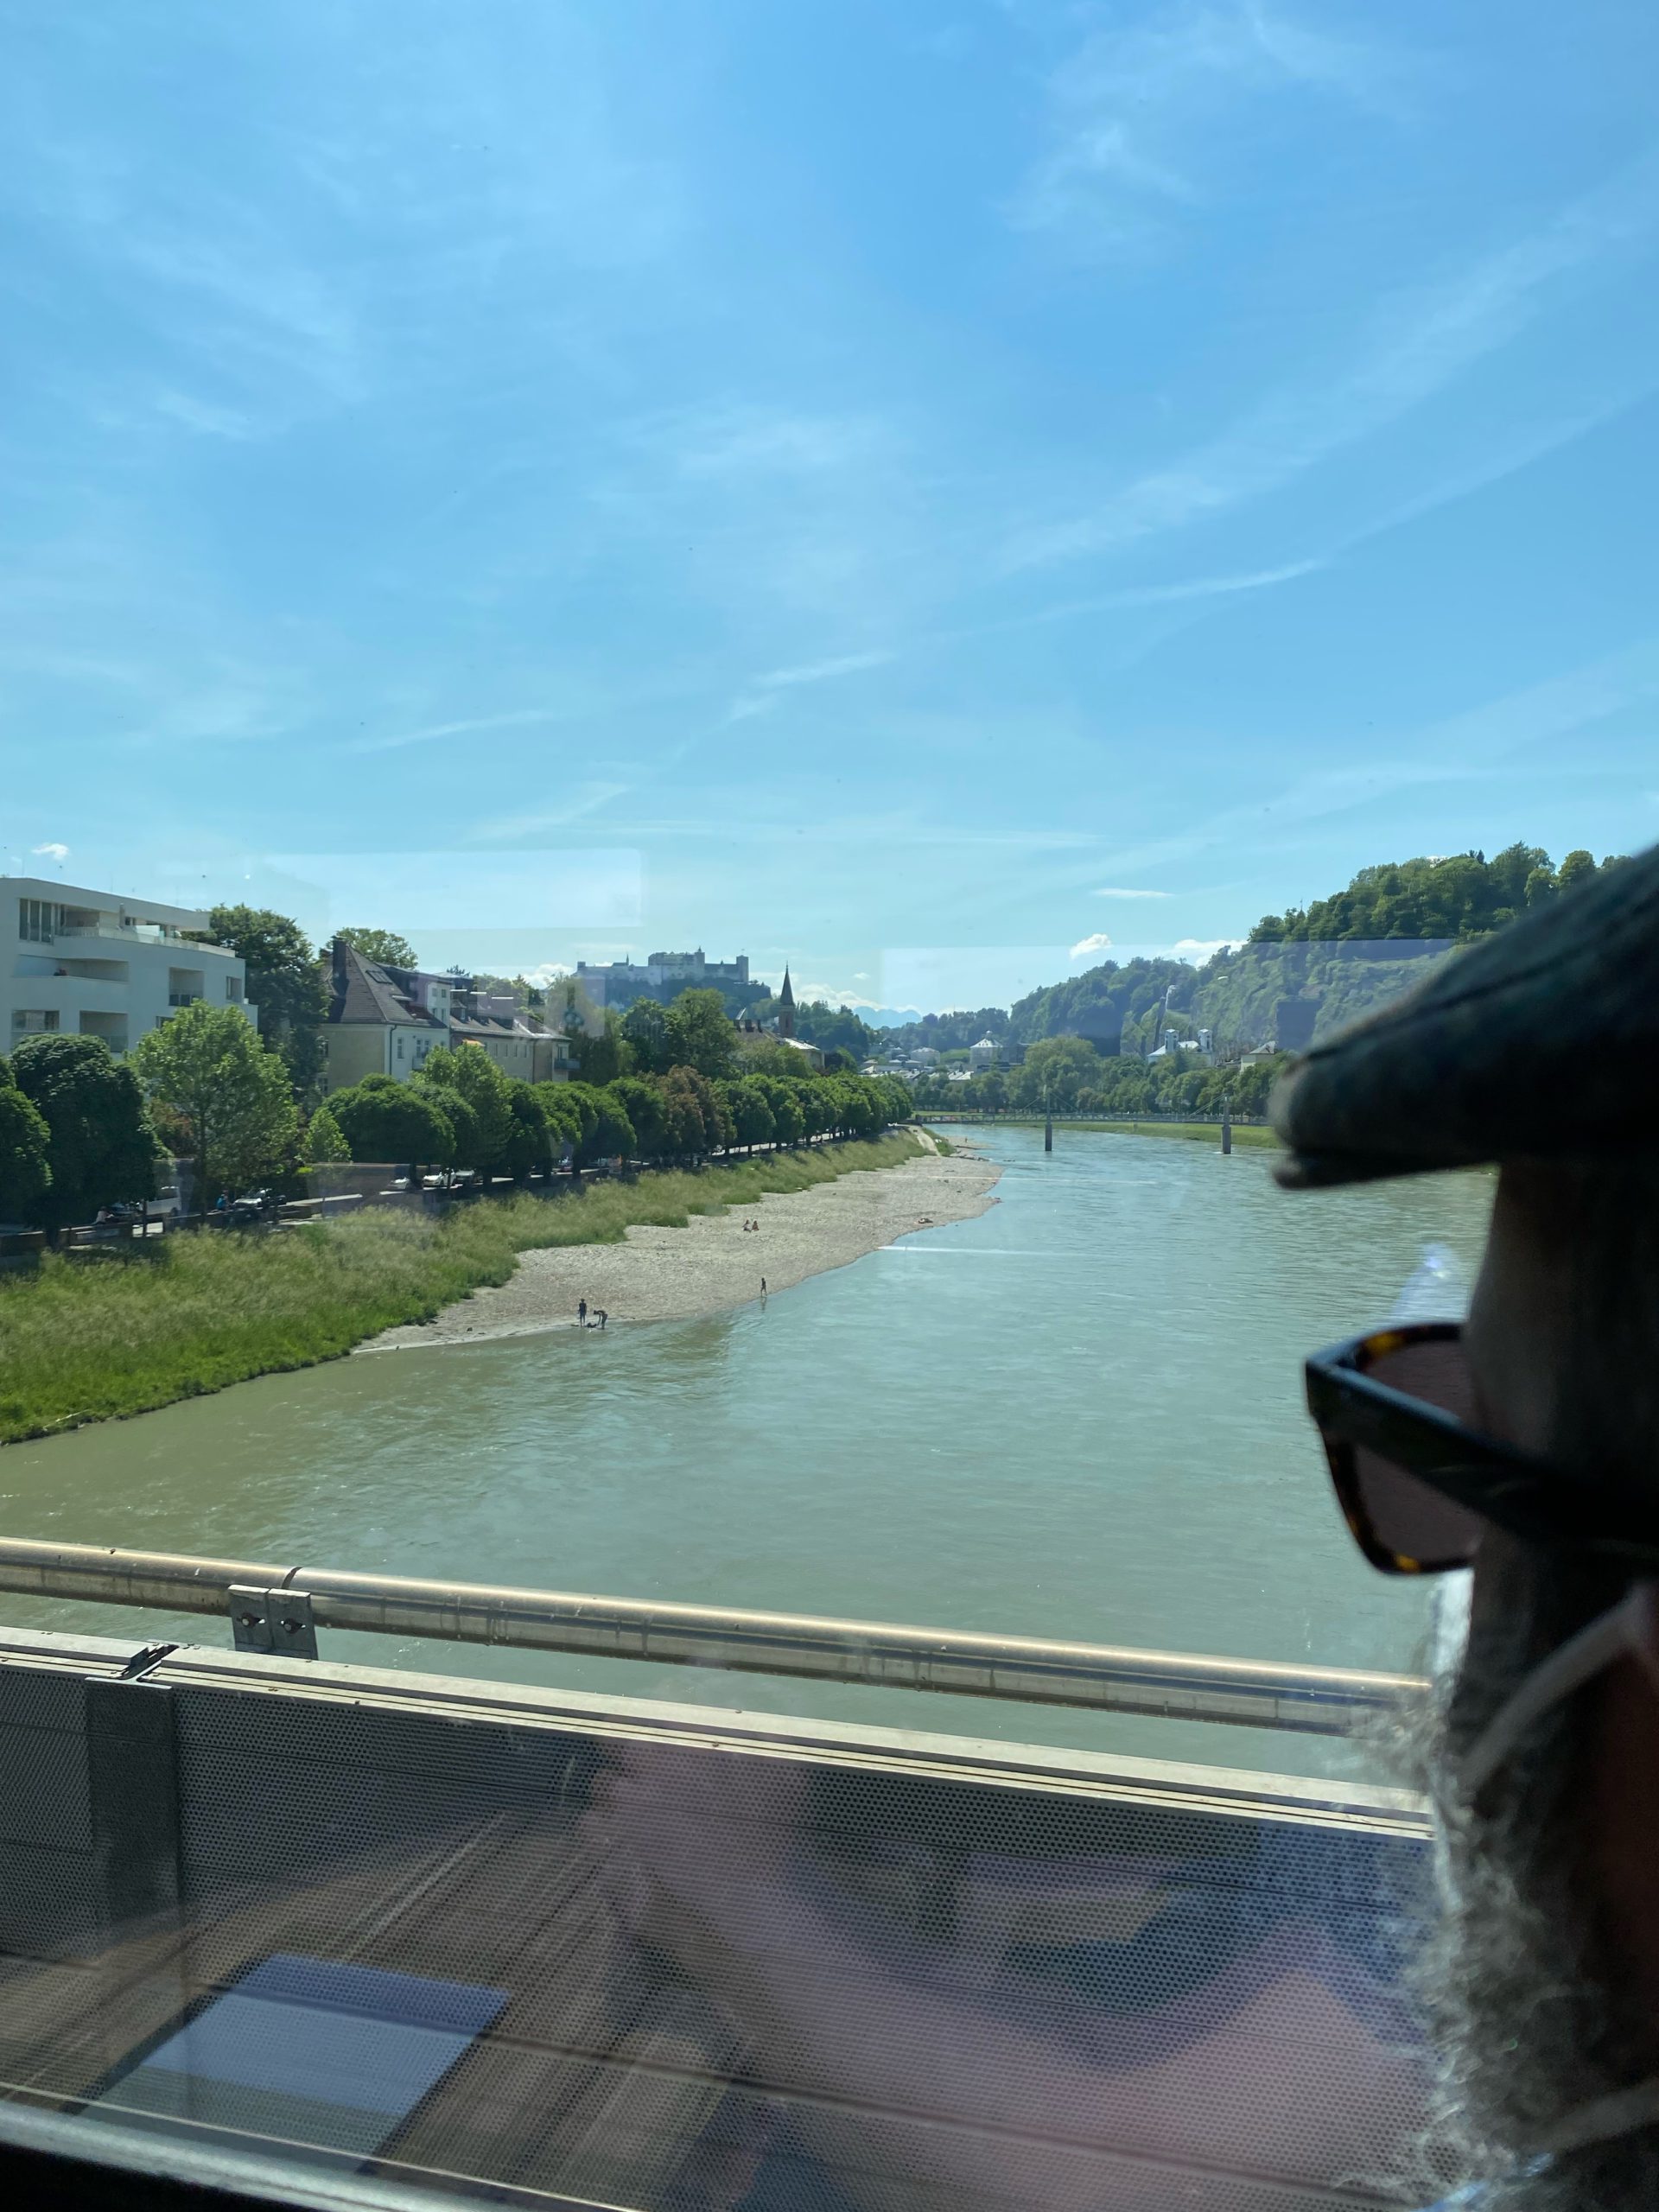 First glimpse of Salzburg